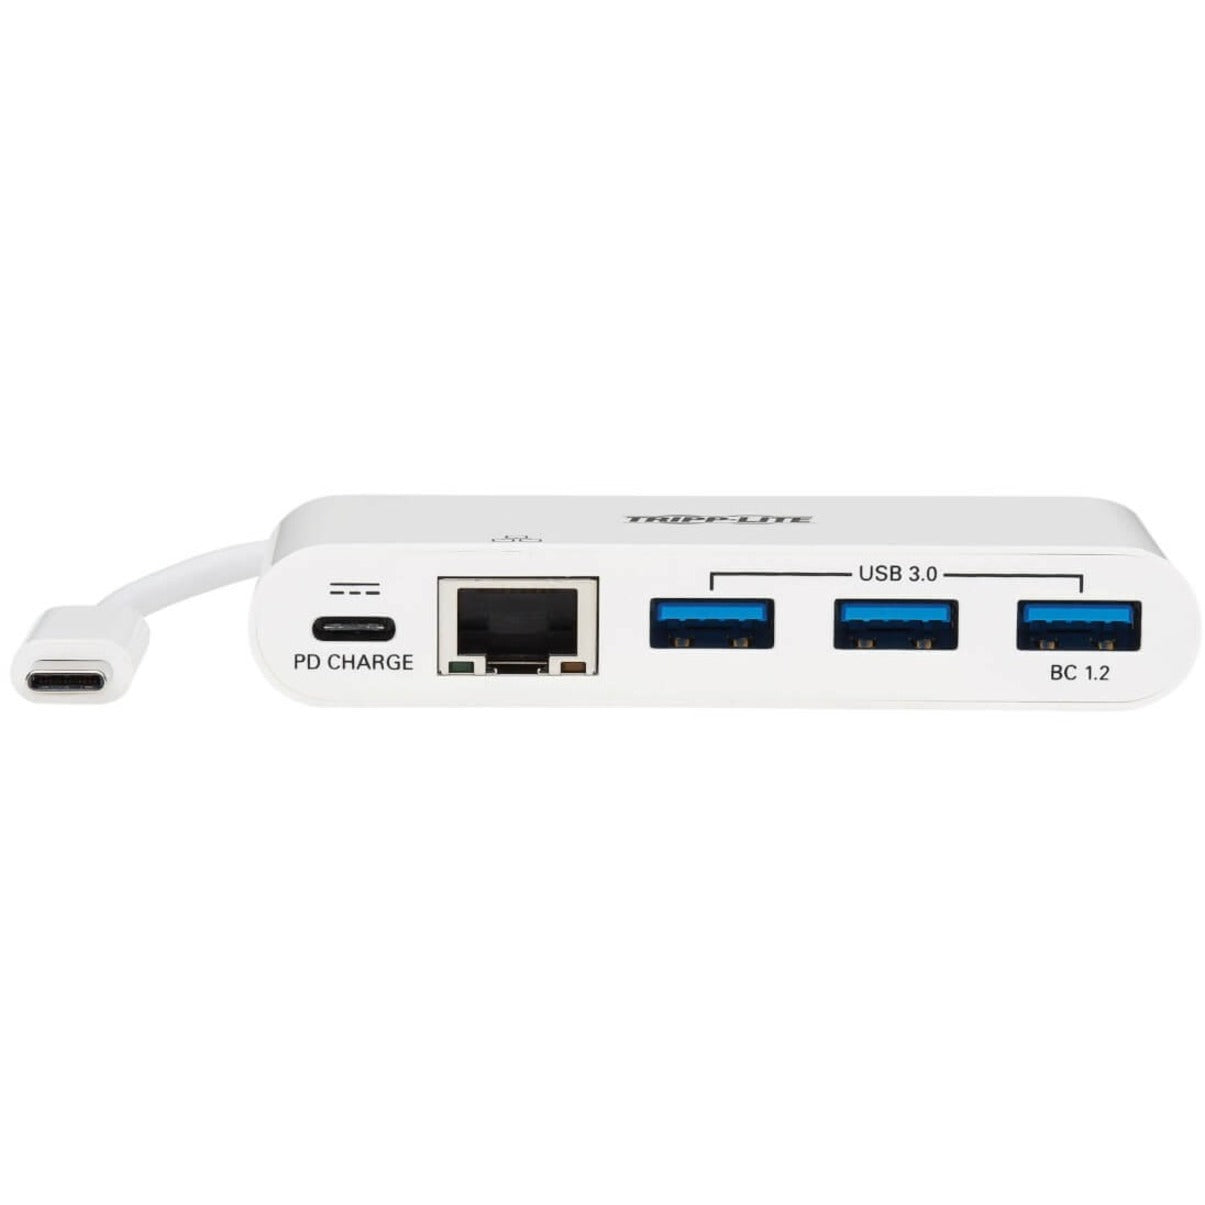 Tripp Lite U460-003-3AG-C USB 3.1 Gen 1 USB-C Portable Hub/Adapter 3-Port USB 3.0 Ports 1 Network Port Tripp Lite U460-003-3AG-C Adaptador/hub portátil USB 3.1 Gen 1 USB-C 3 puertos USB 3.0 1 puerto de red